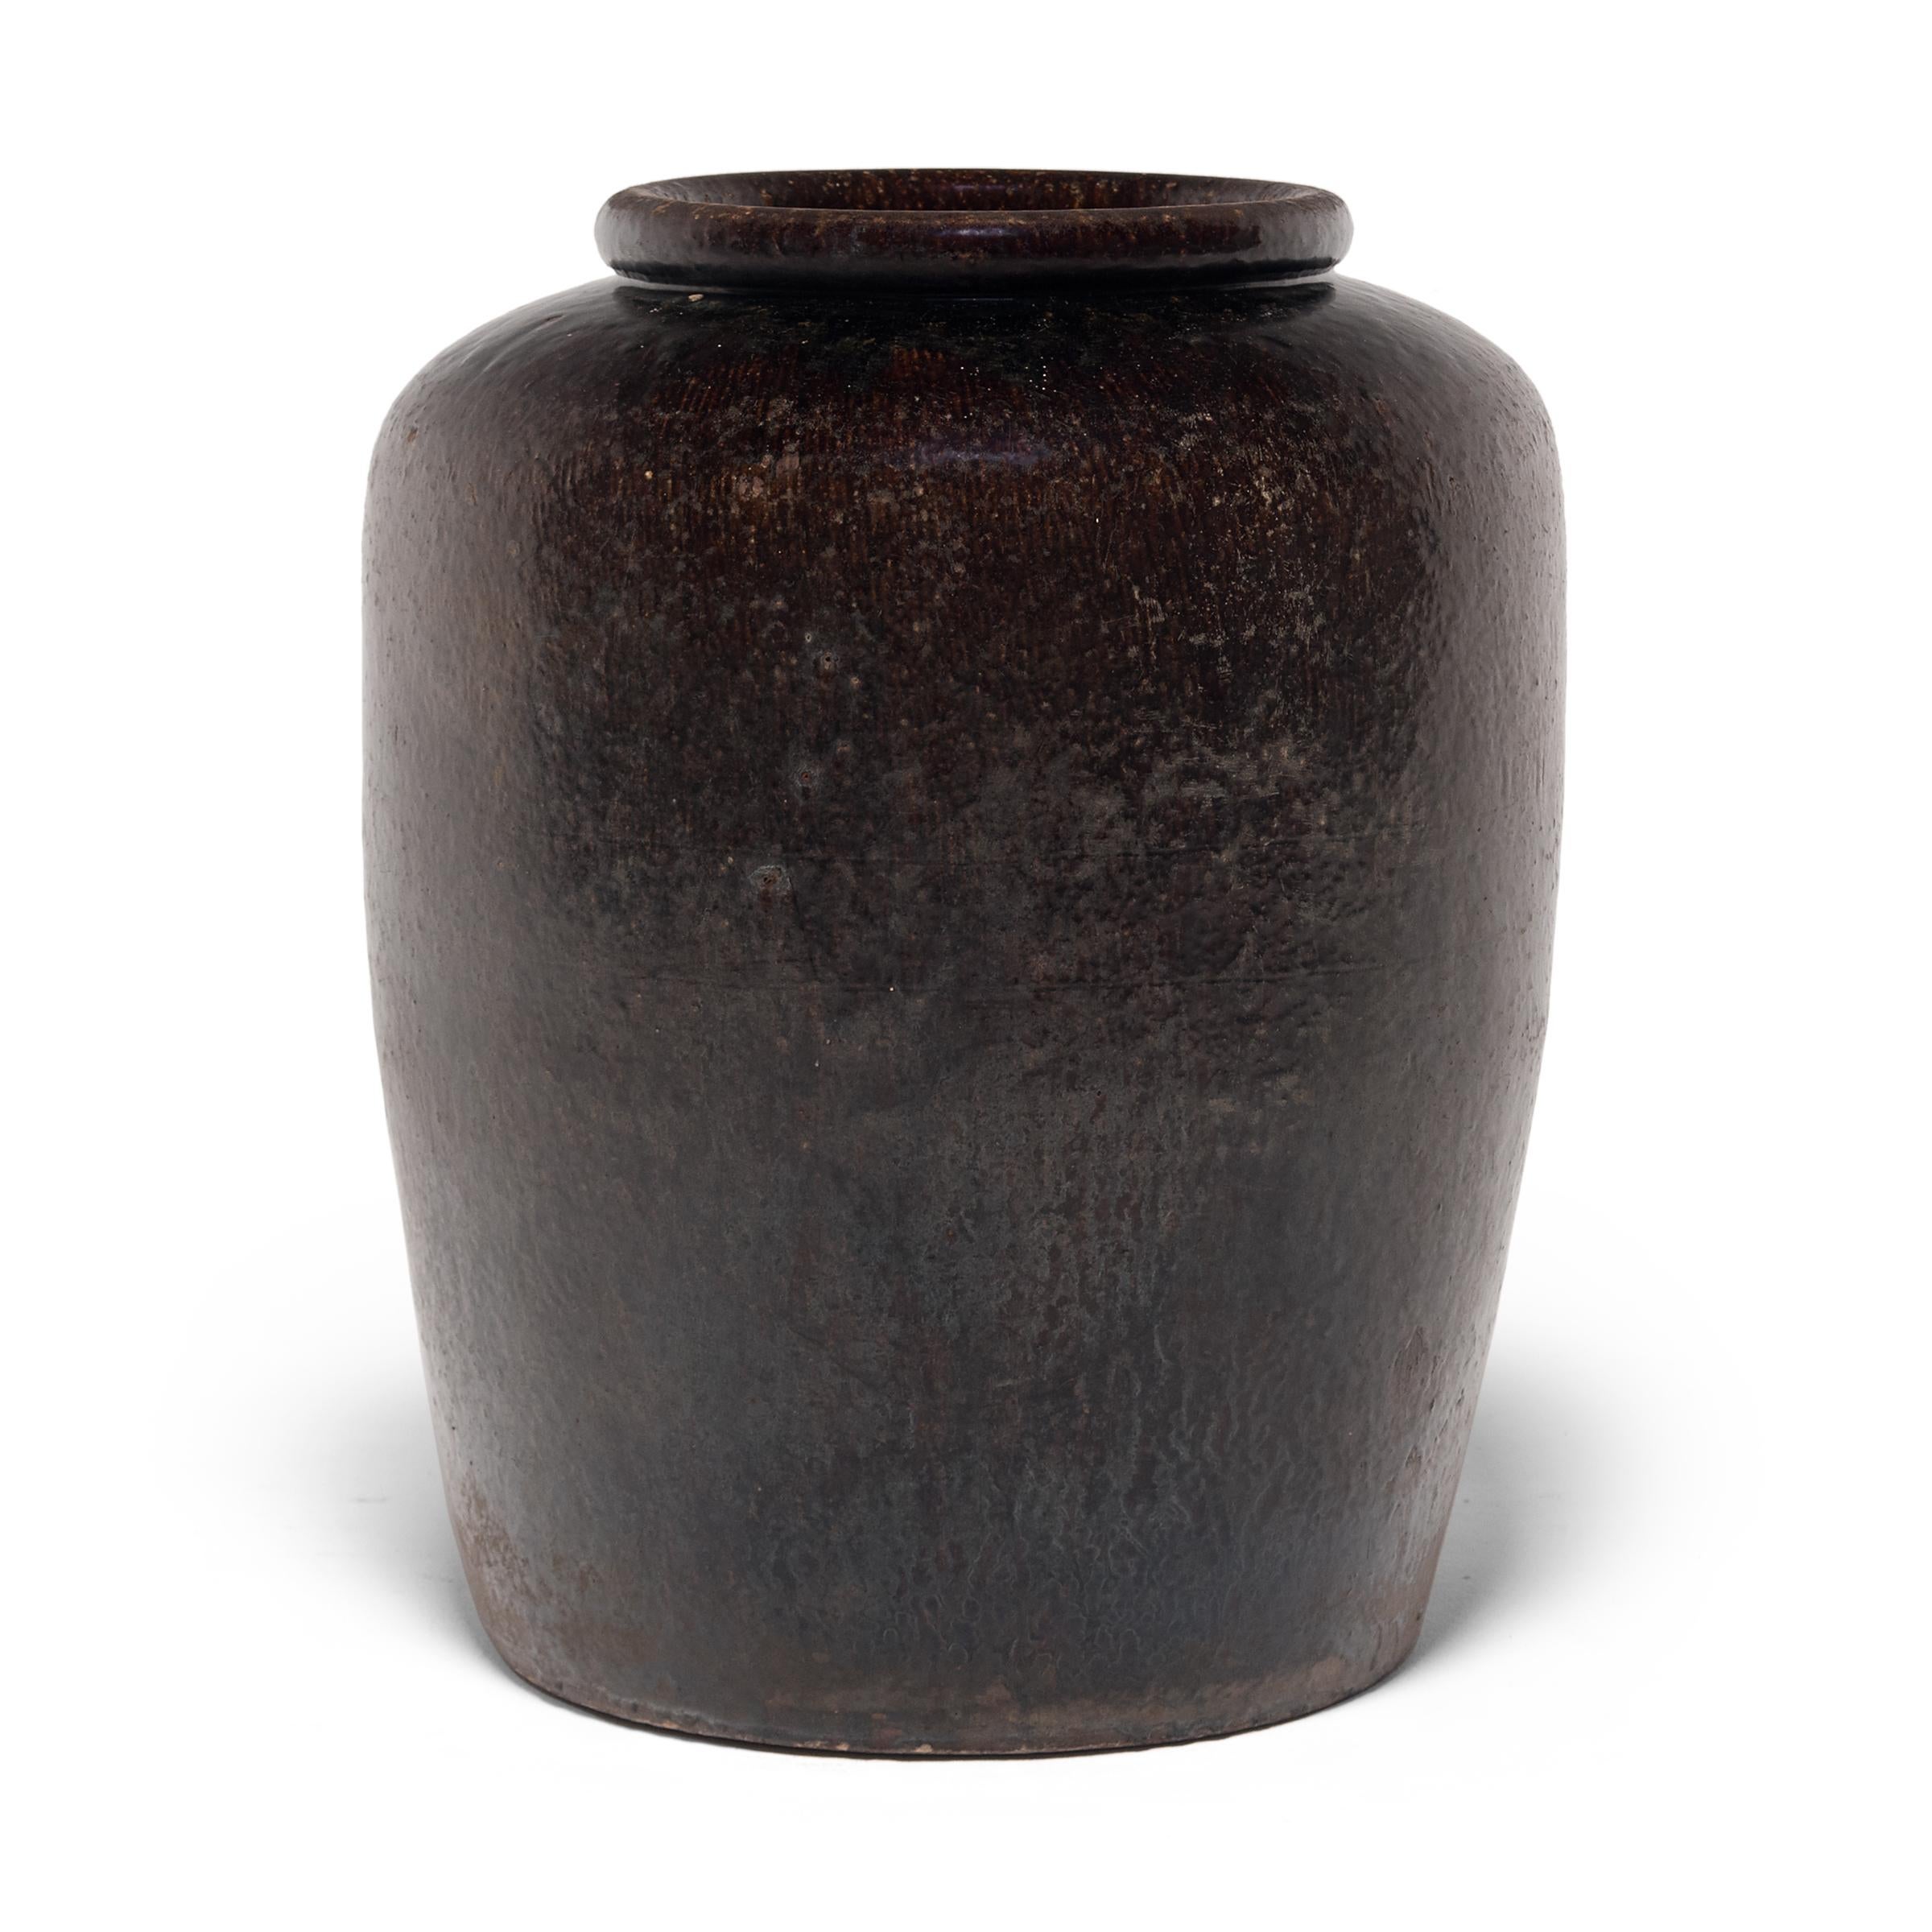 Rustic Chinese Dark Glazed Pickling Pot, circa 1900